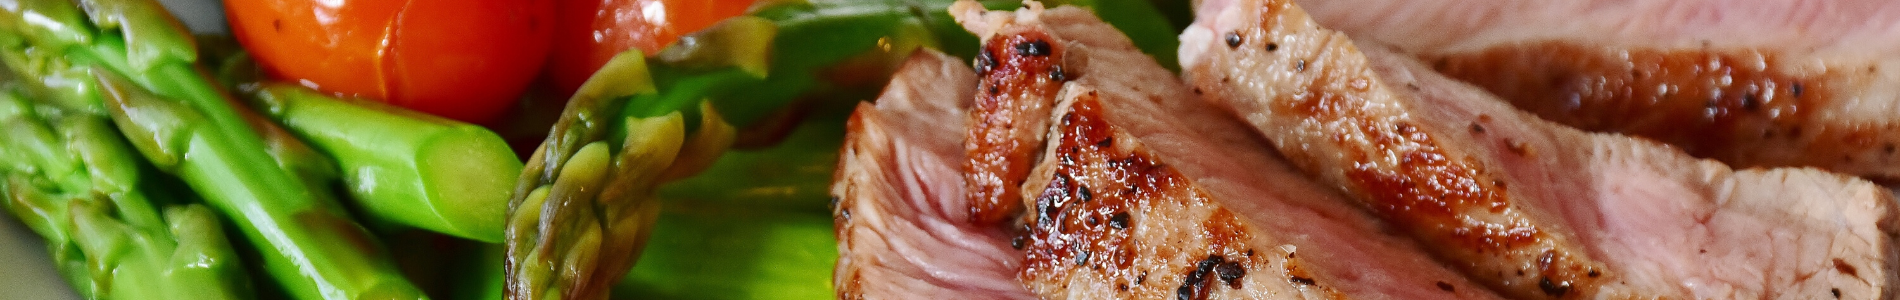 meat and asparagus closeup taste